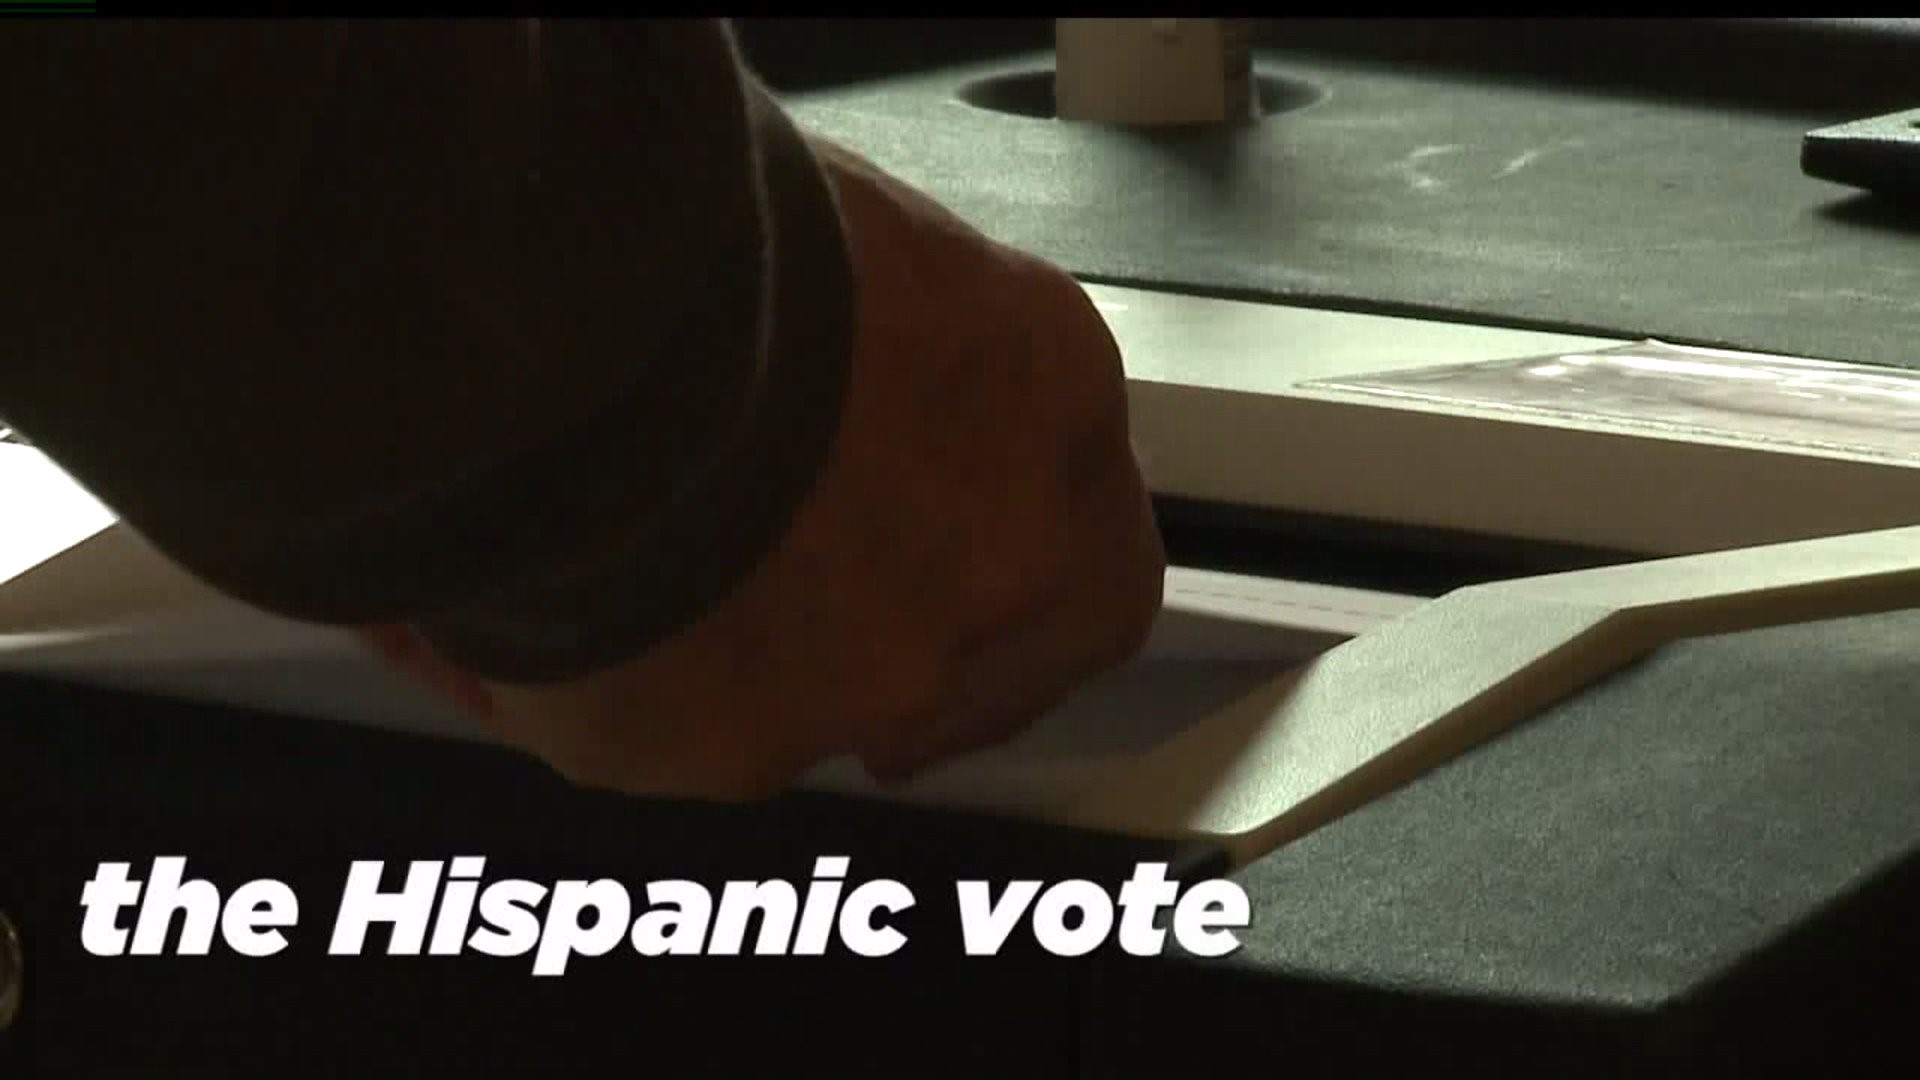 THIS WEEK The Hispanic Vote